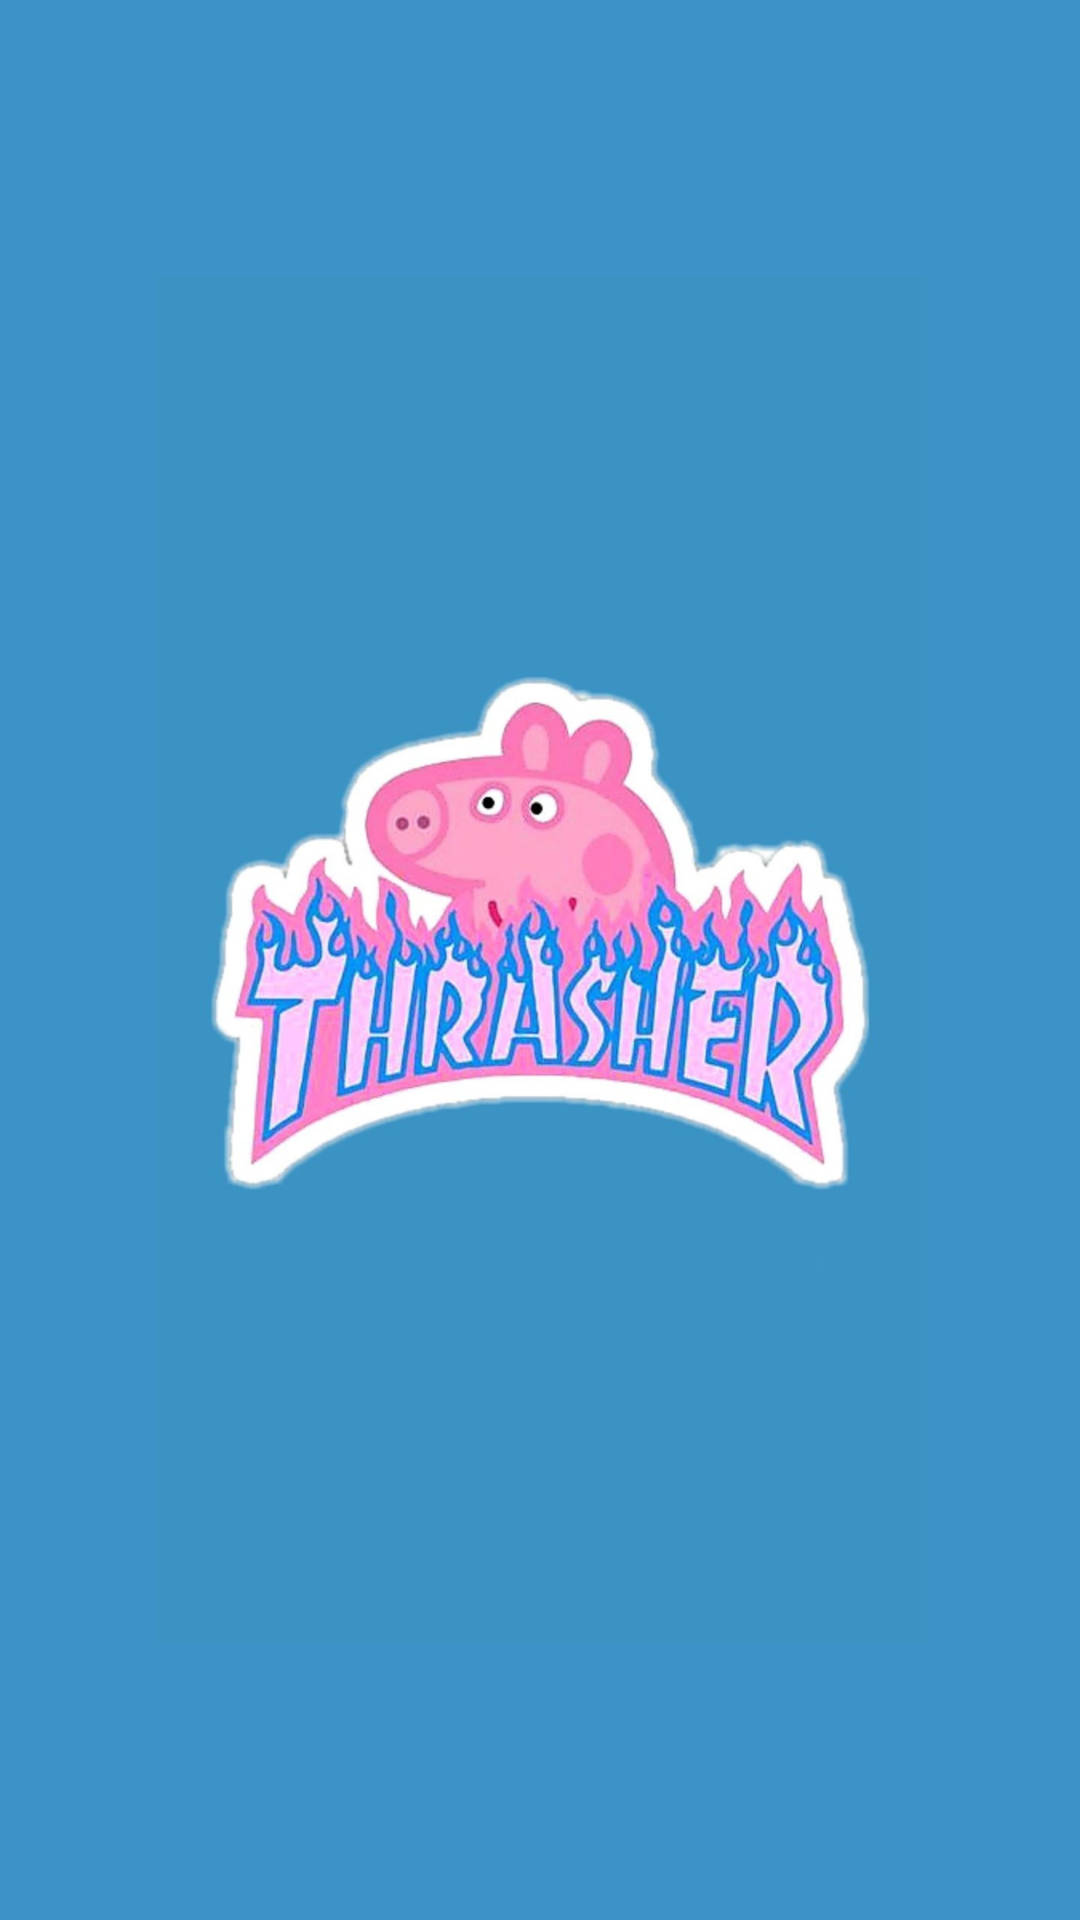 Thrasherpeppa Pig Would Be 